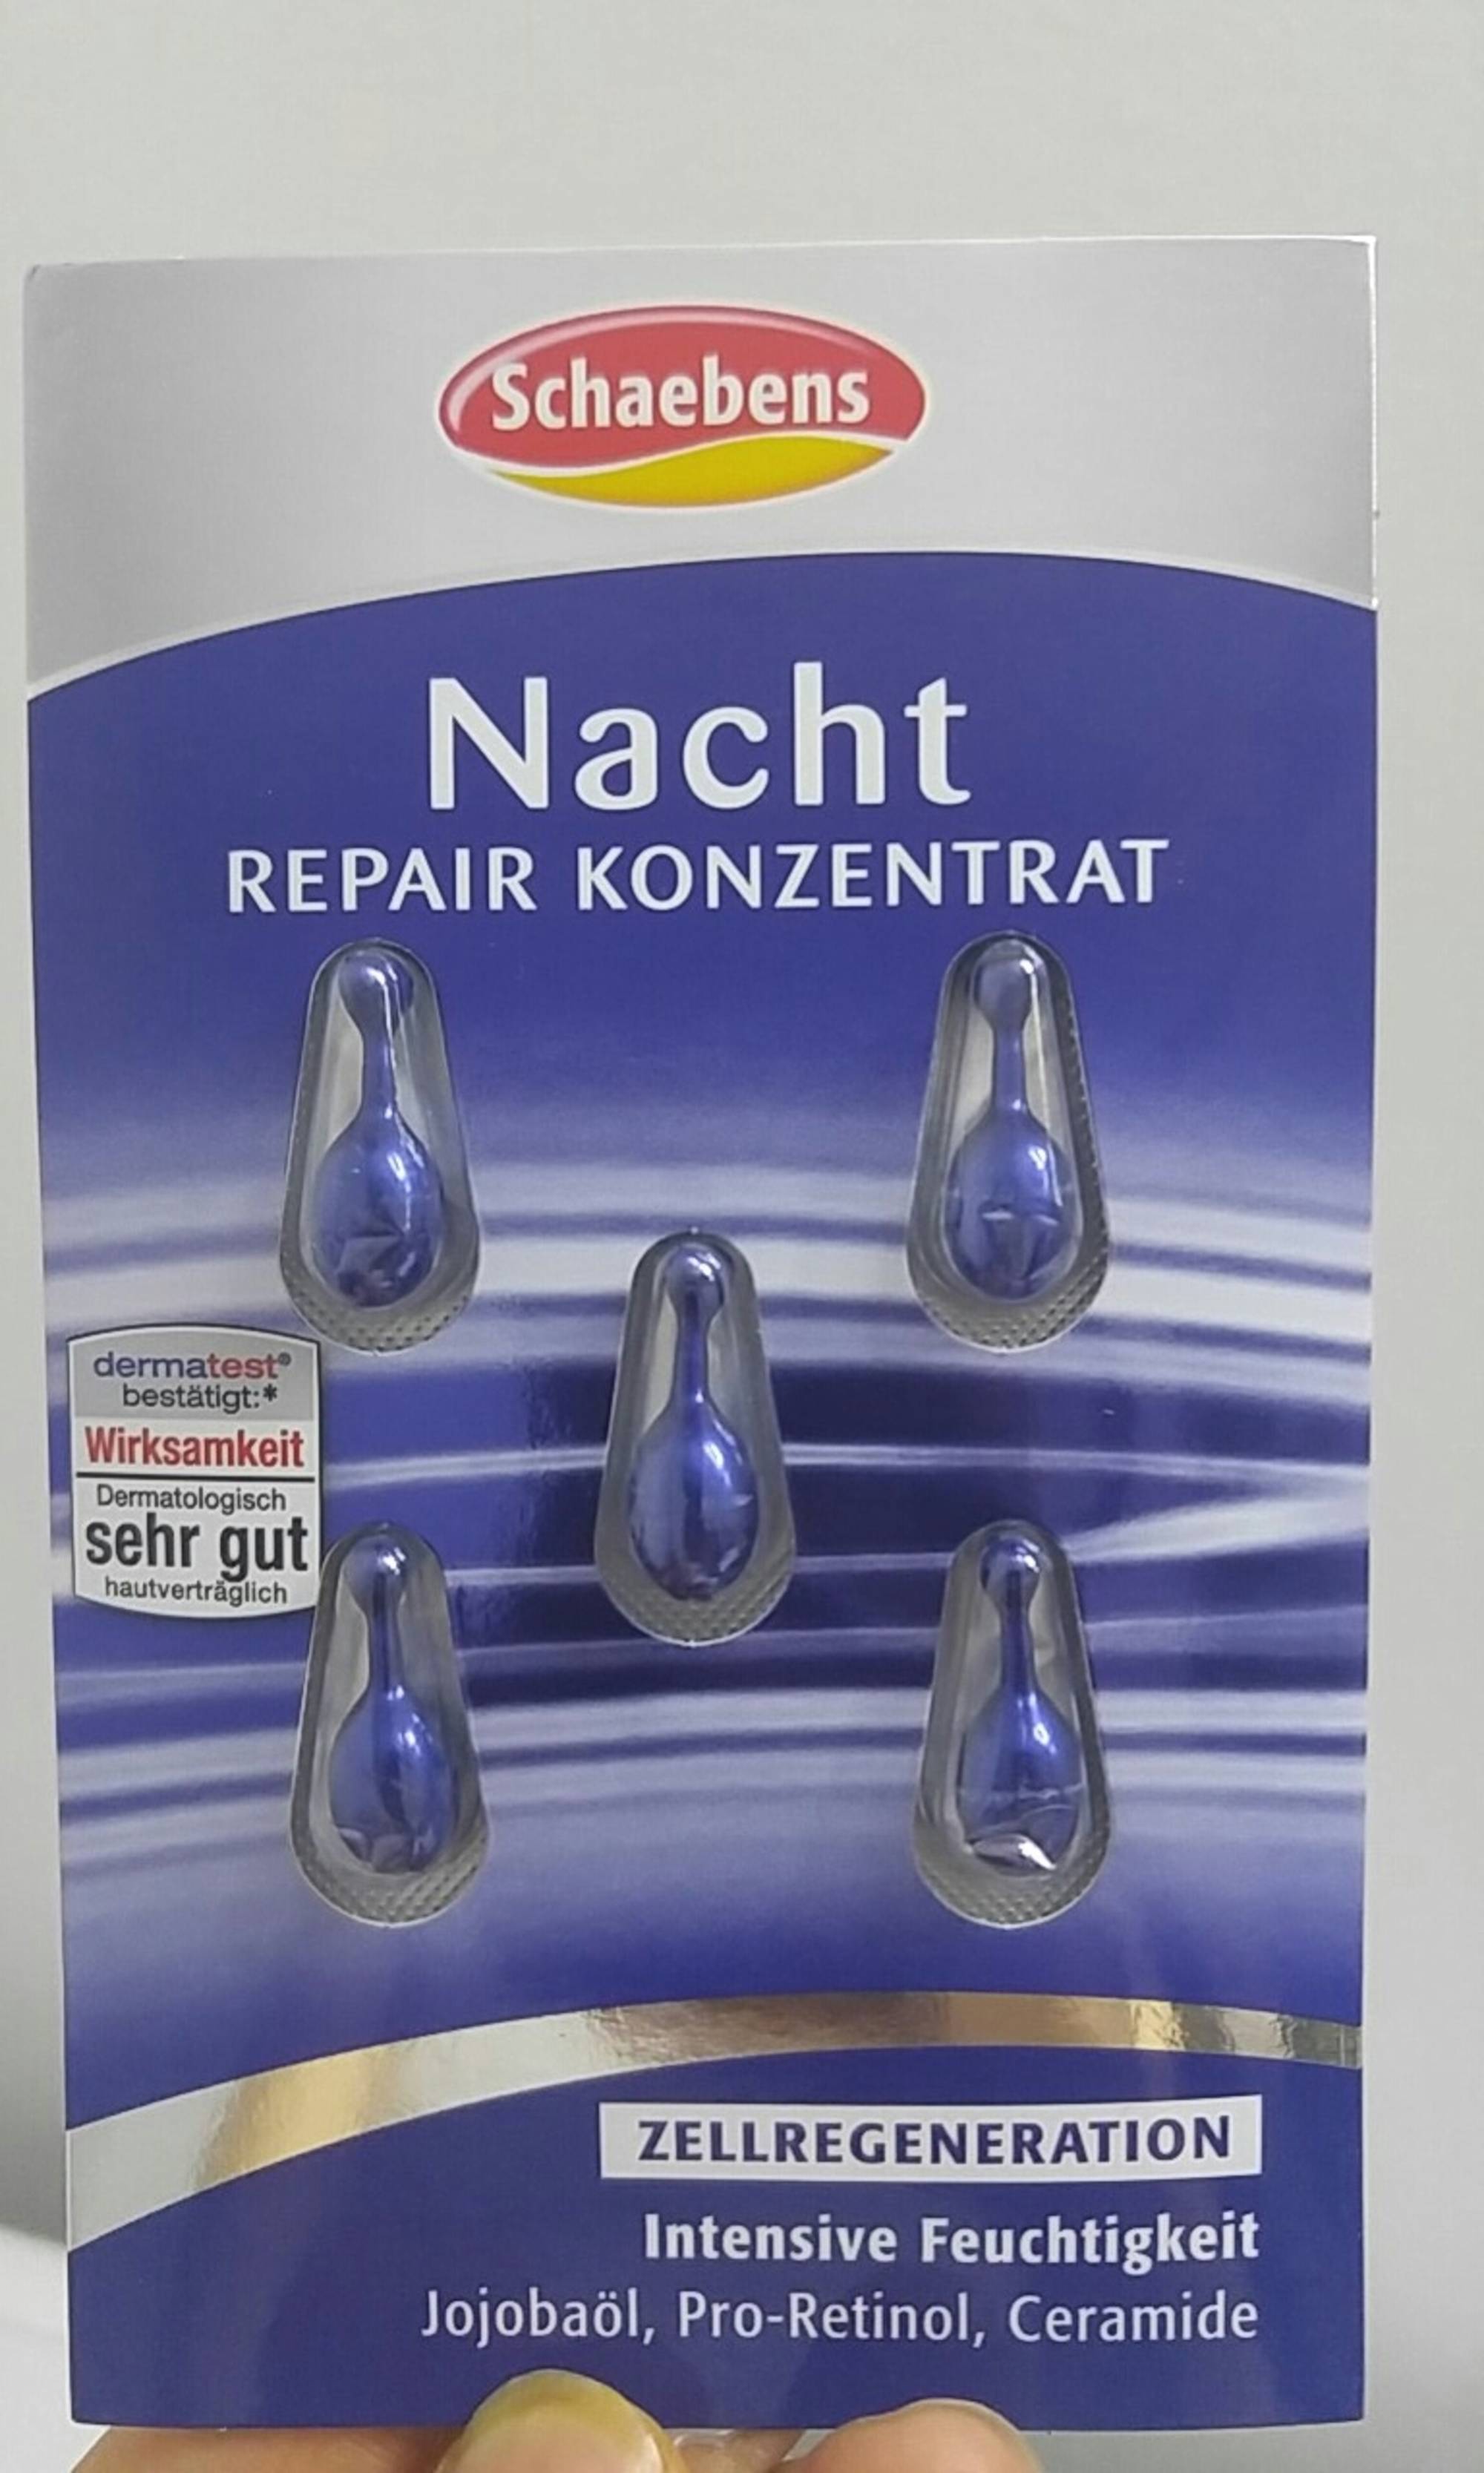 SCHAEBENS - Nacht - Repair konzentrat